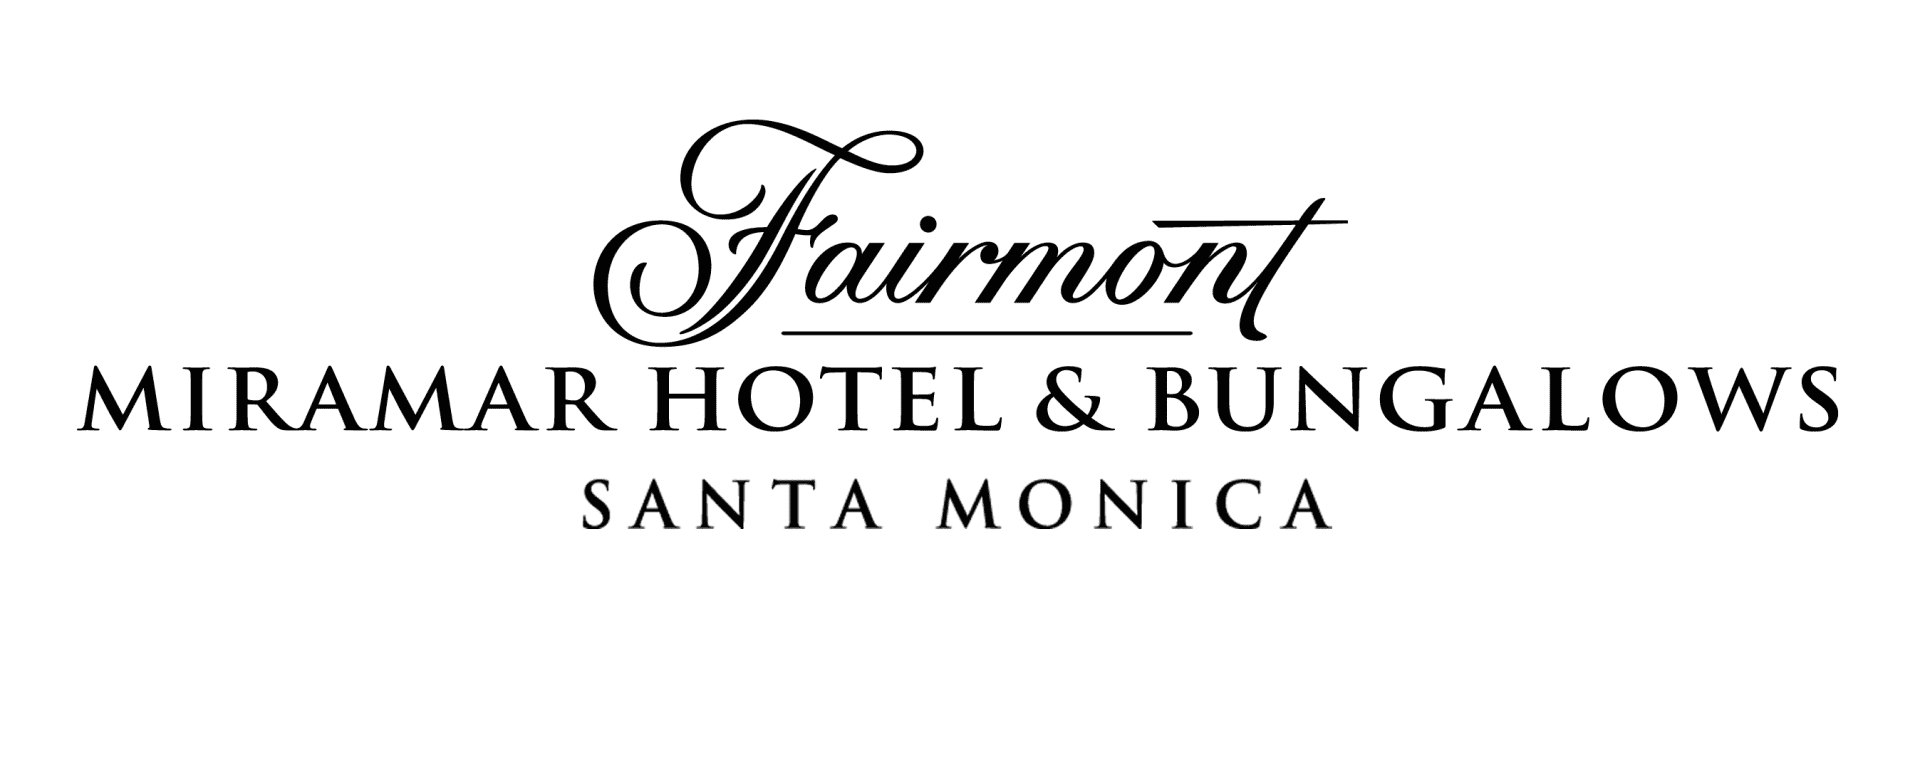 Fairmont hotel logo